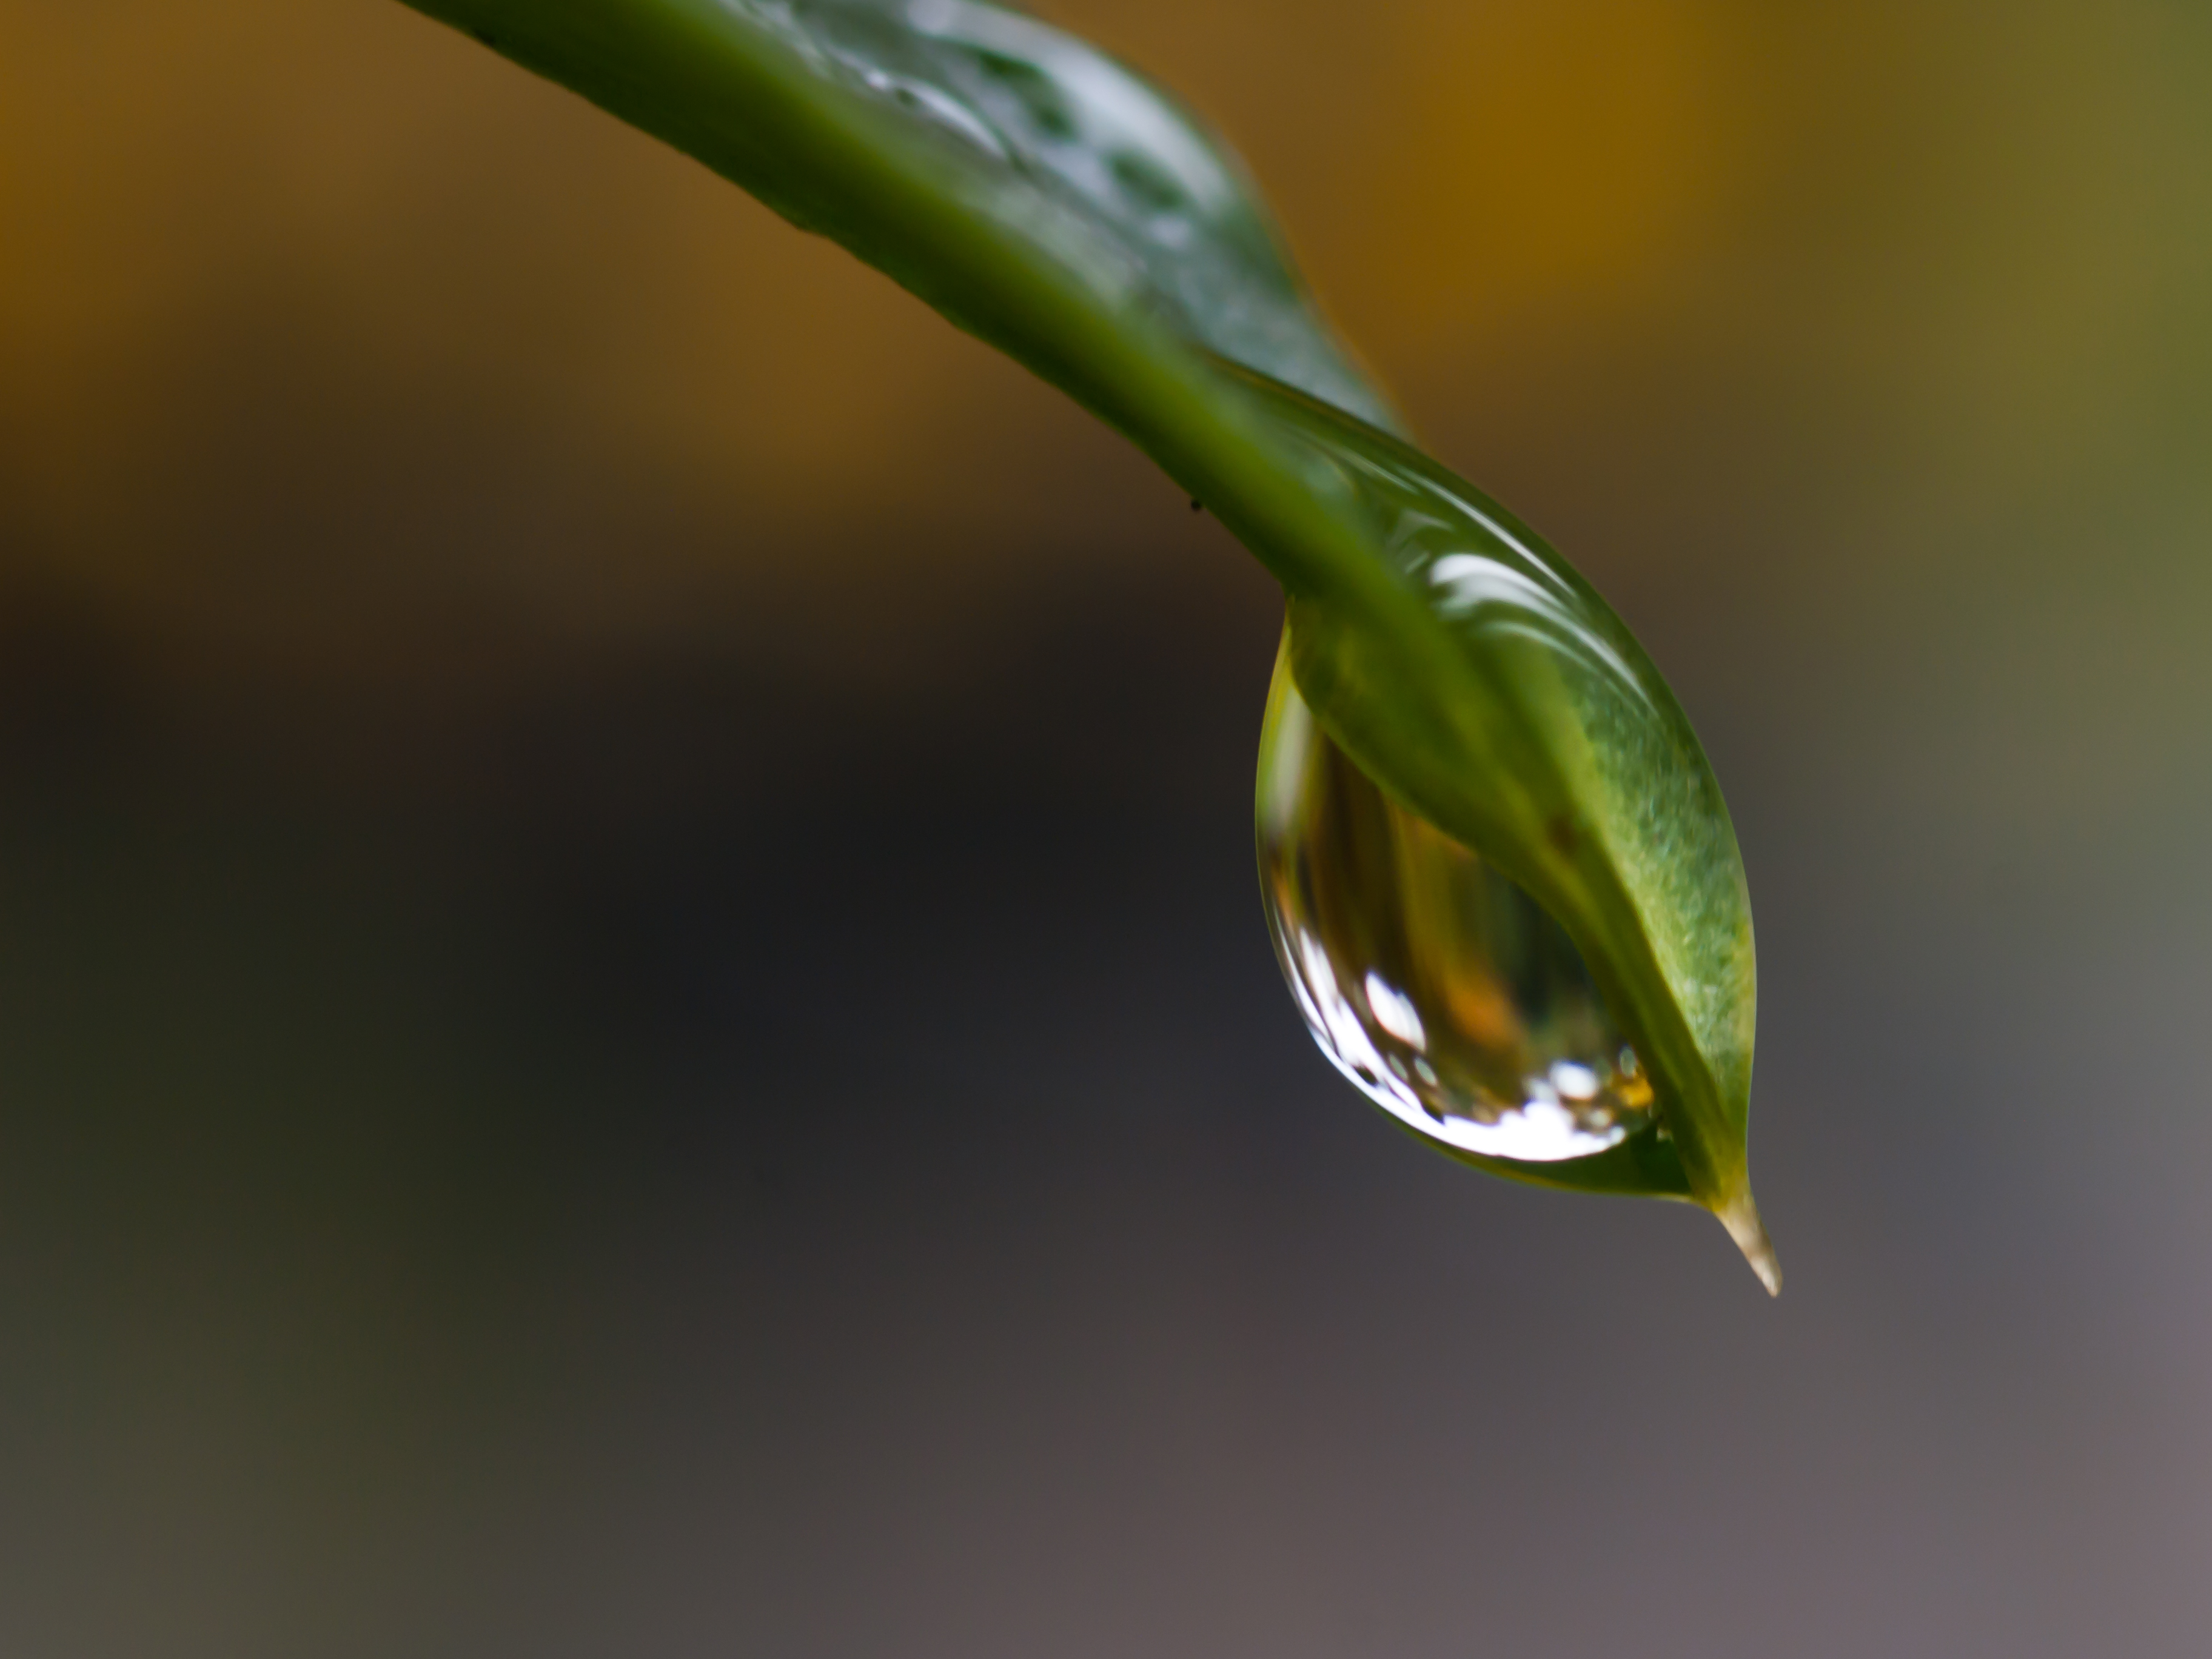 File:Water Droplet On Leaf.jpg - Wikimedia Commons